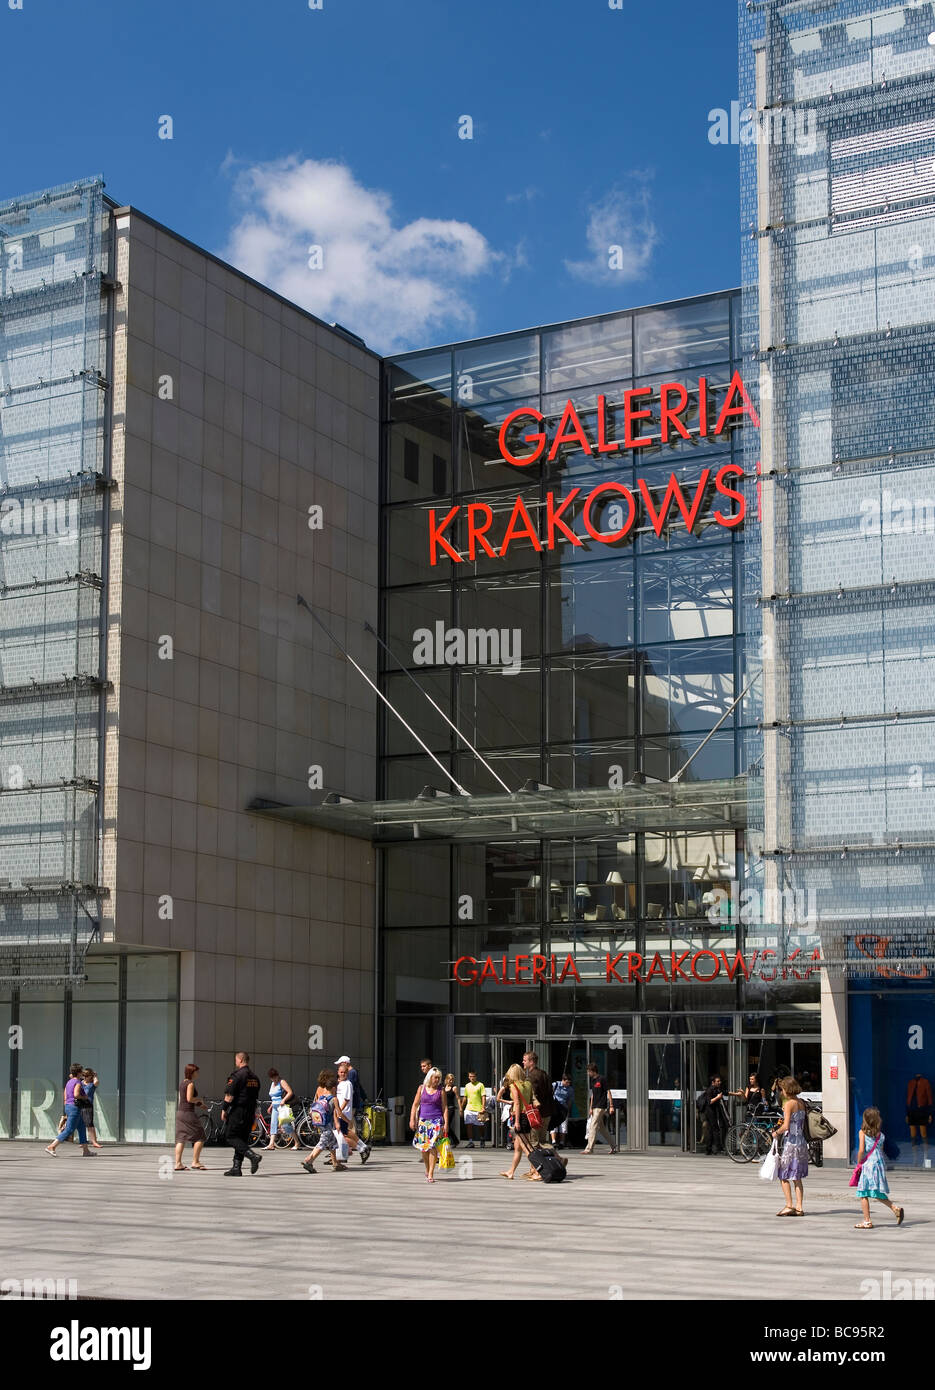 Galeria Krakowska supermarket Krakow Poland Stock Photo - Alamy